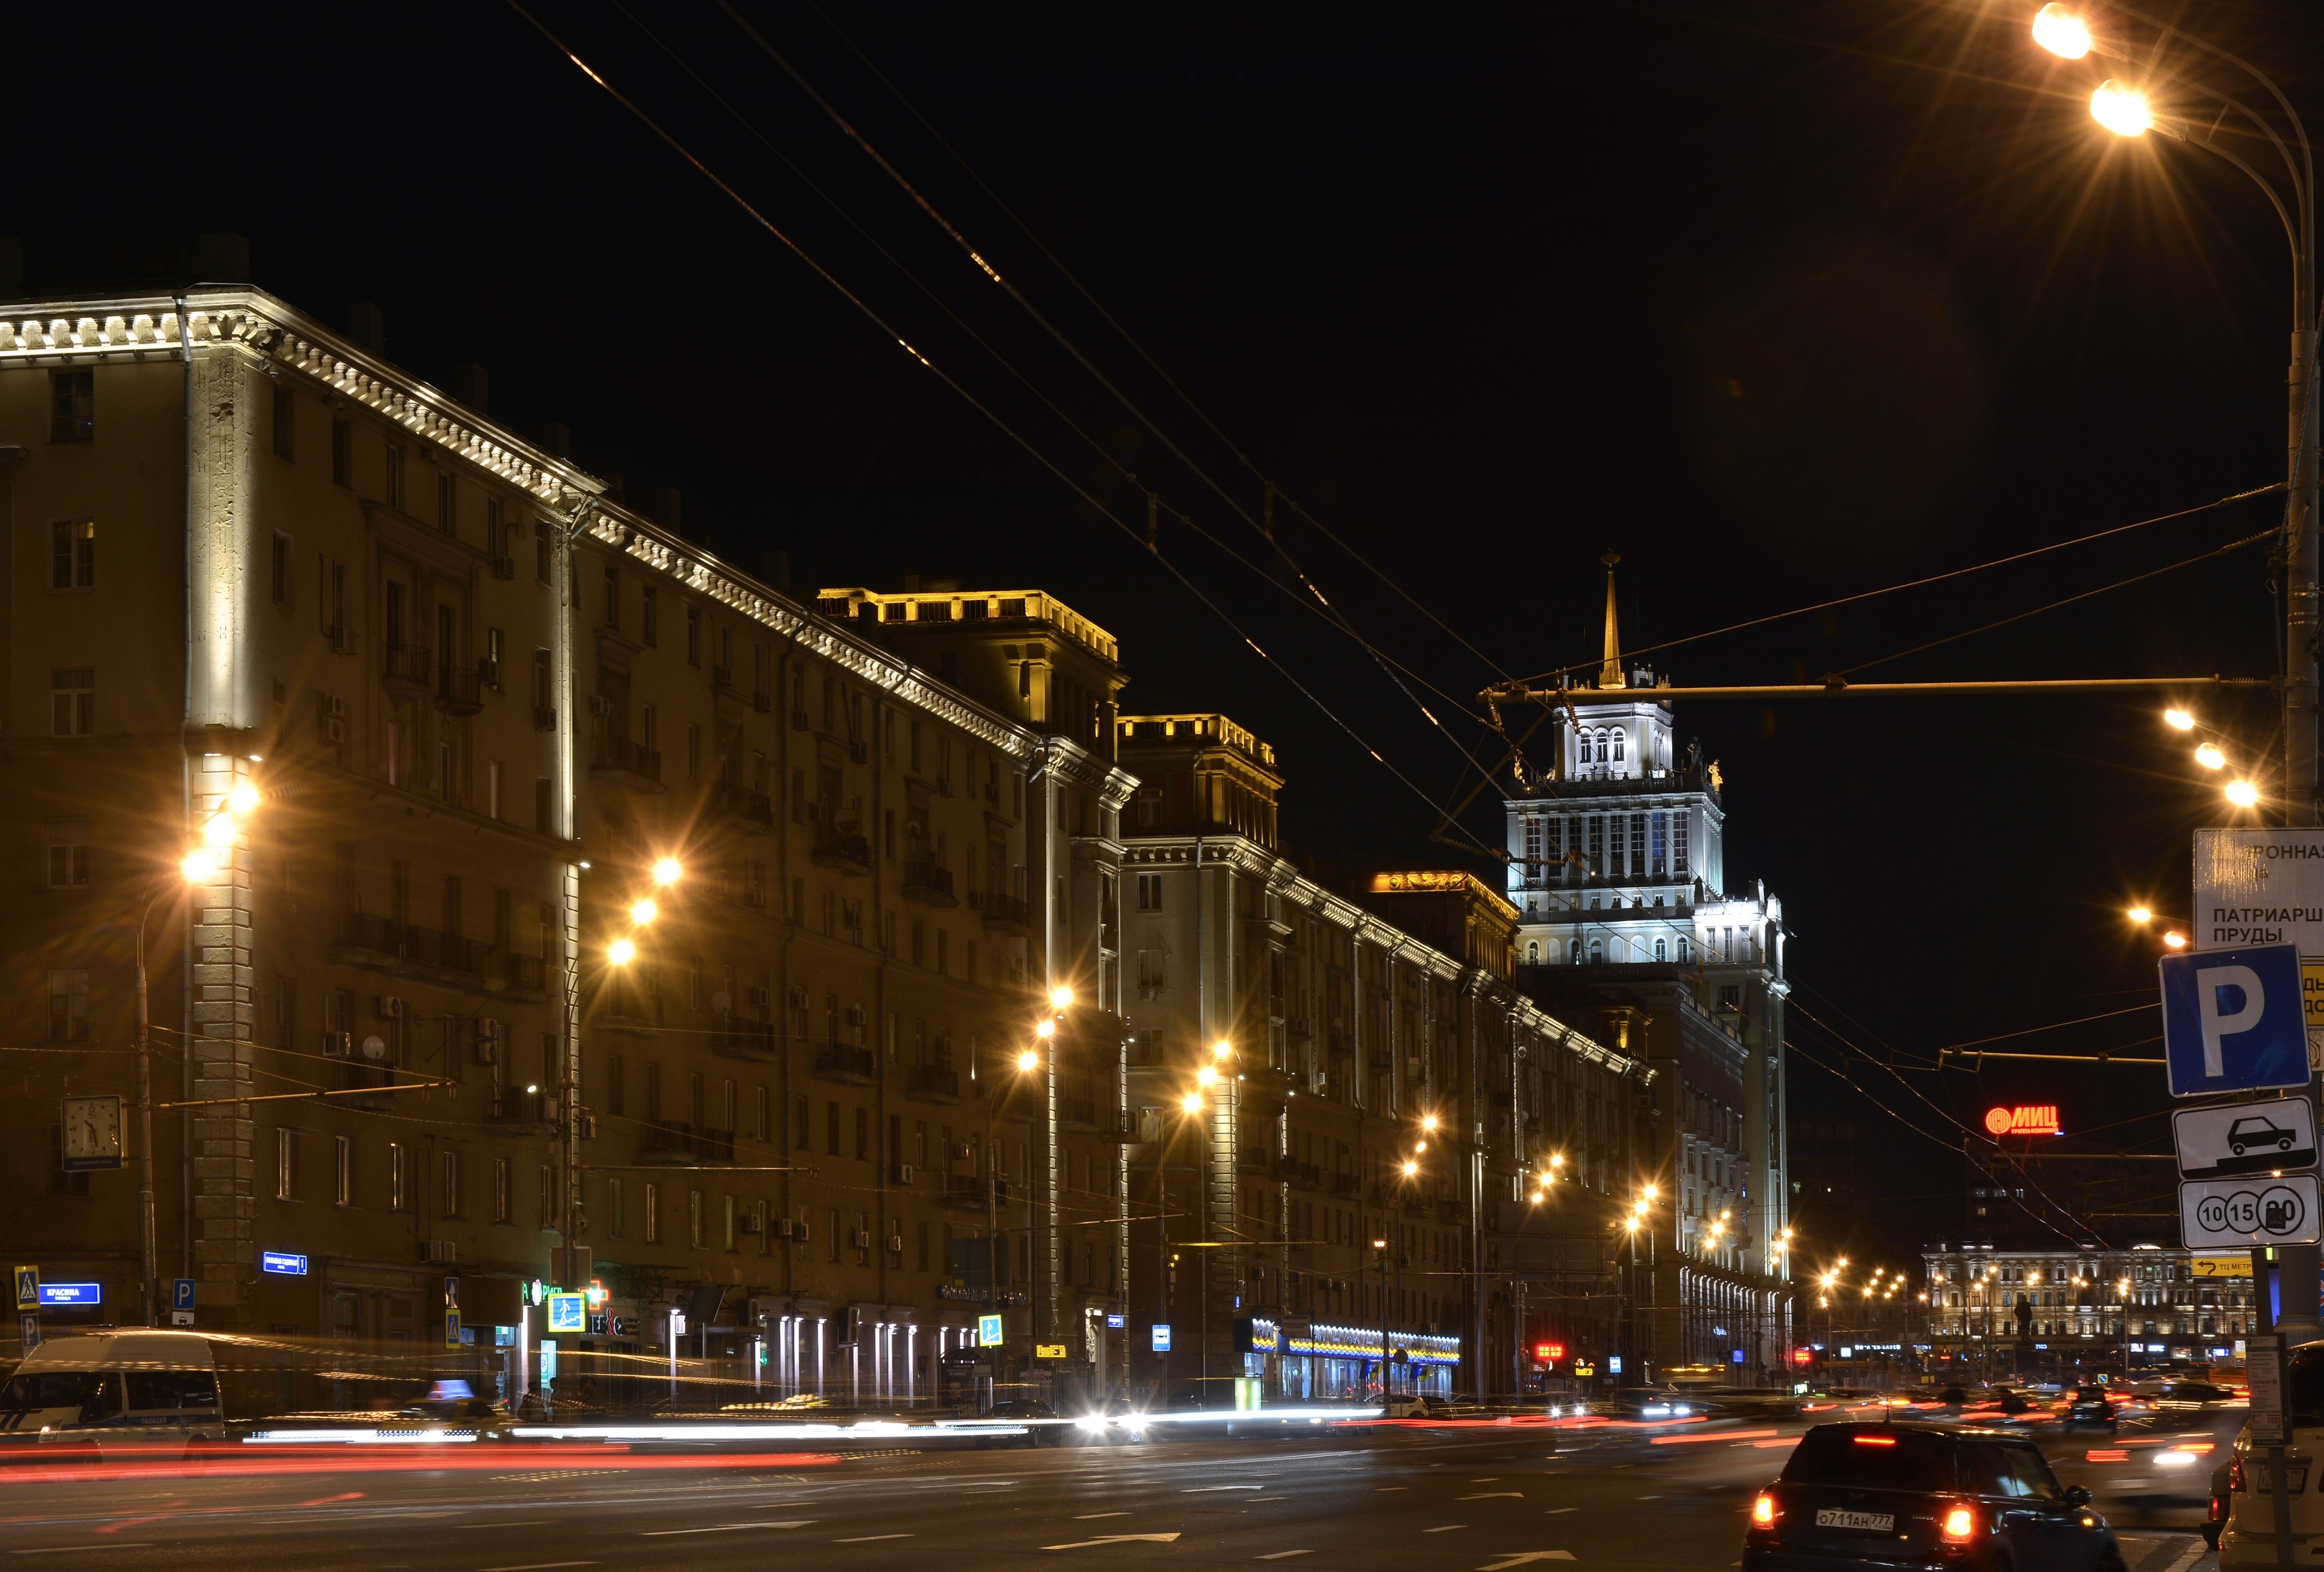 2015 night in Moscow - Bolshaya Sadovaya Street 01